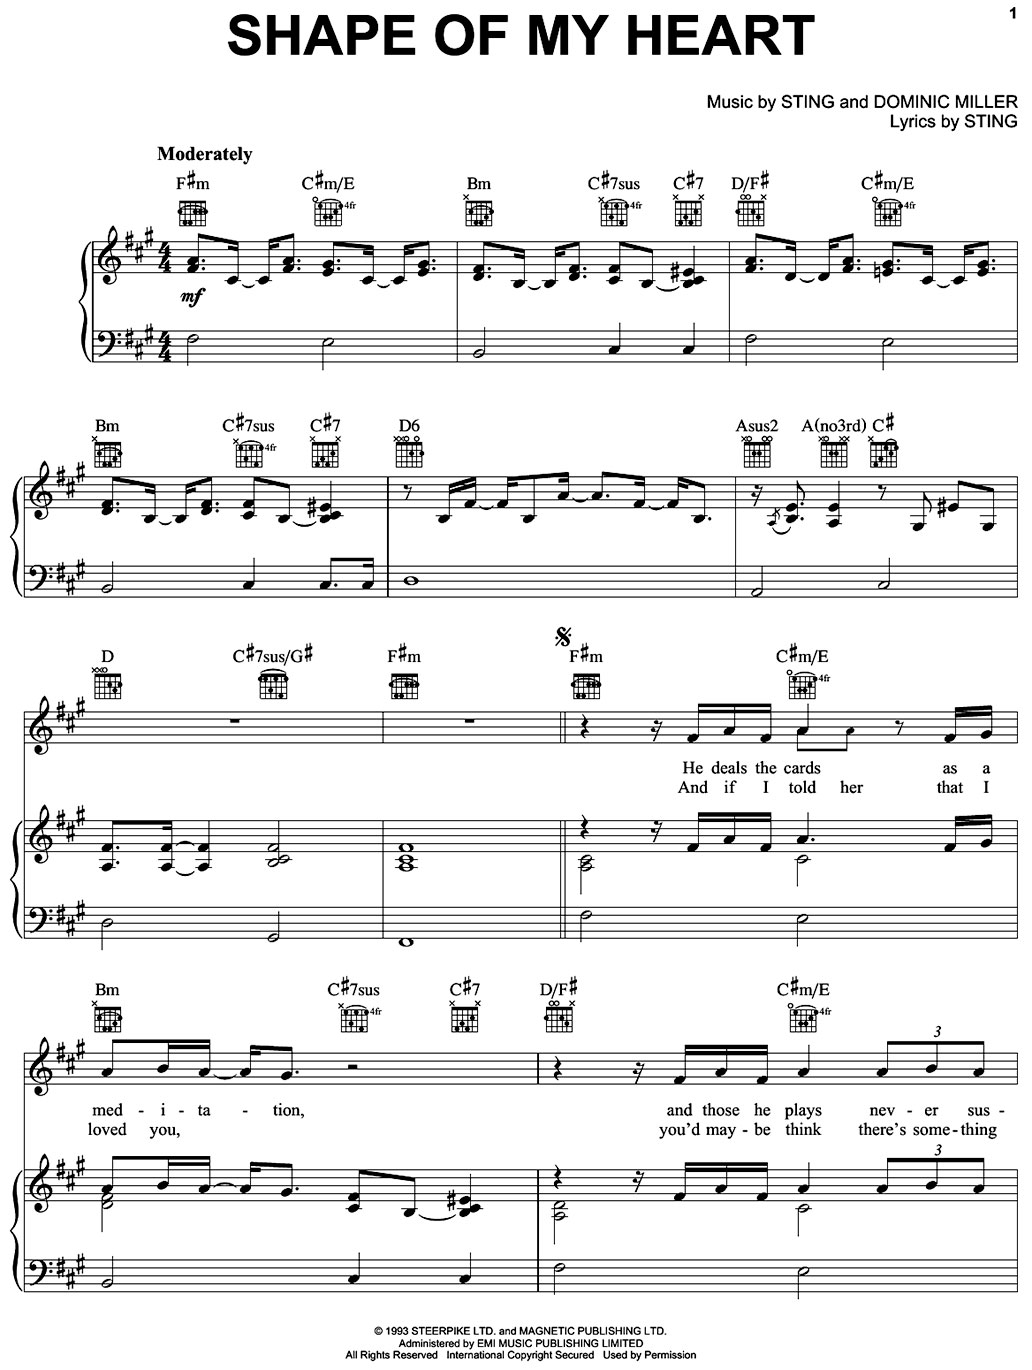 shape of my heart piano sheet music notes